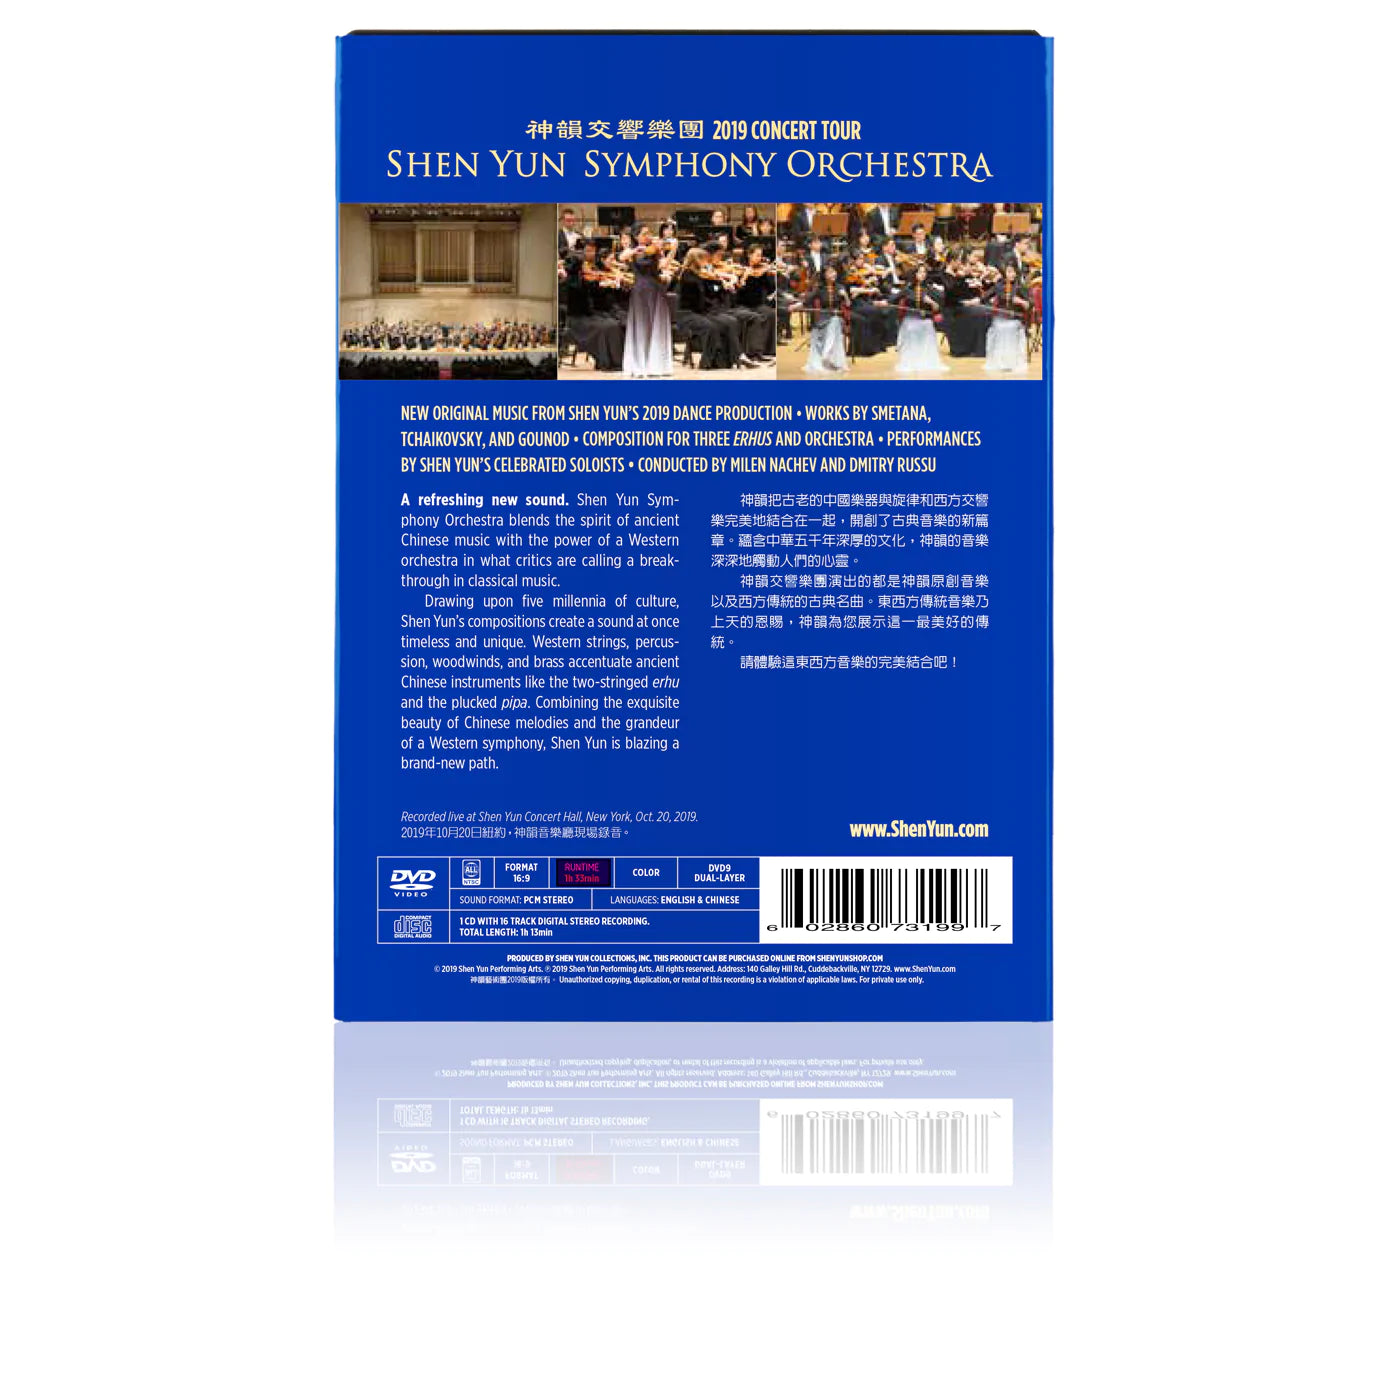 2019 Shen Yun Symphony Orchestra Concert Tour Recordings - DVD, Blu-ray & CD Set